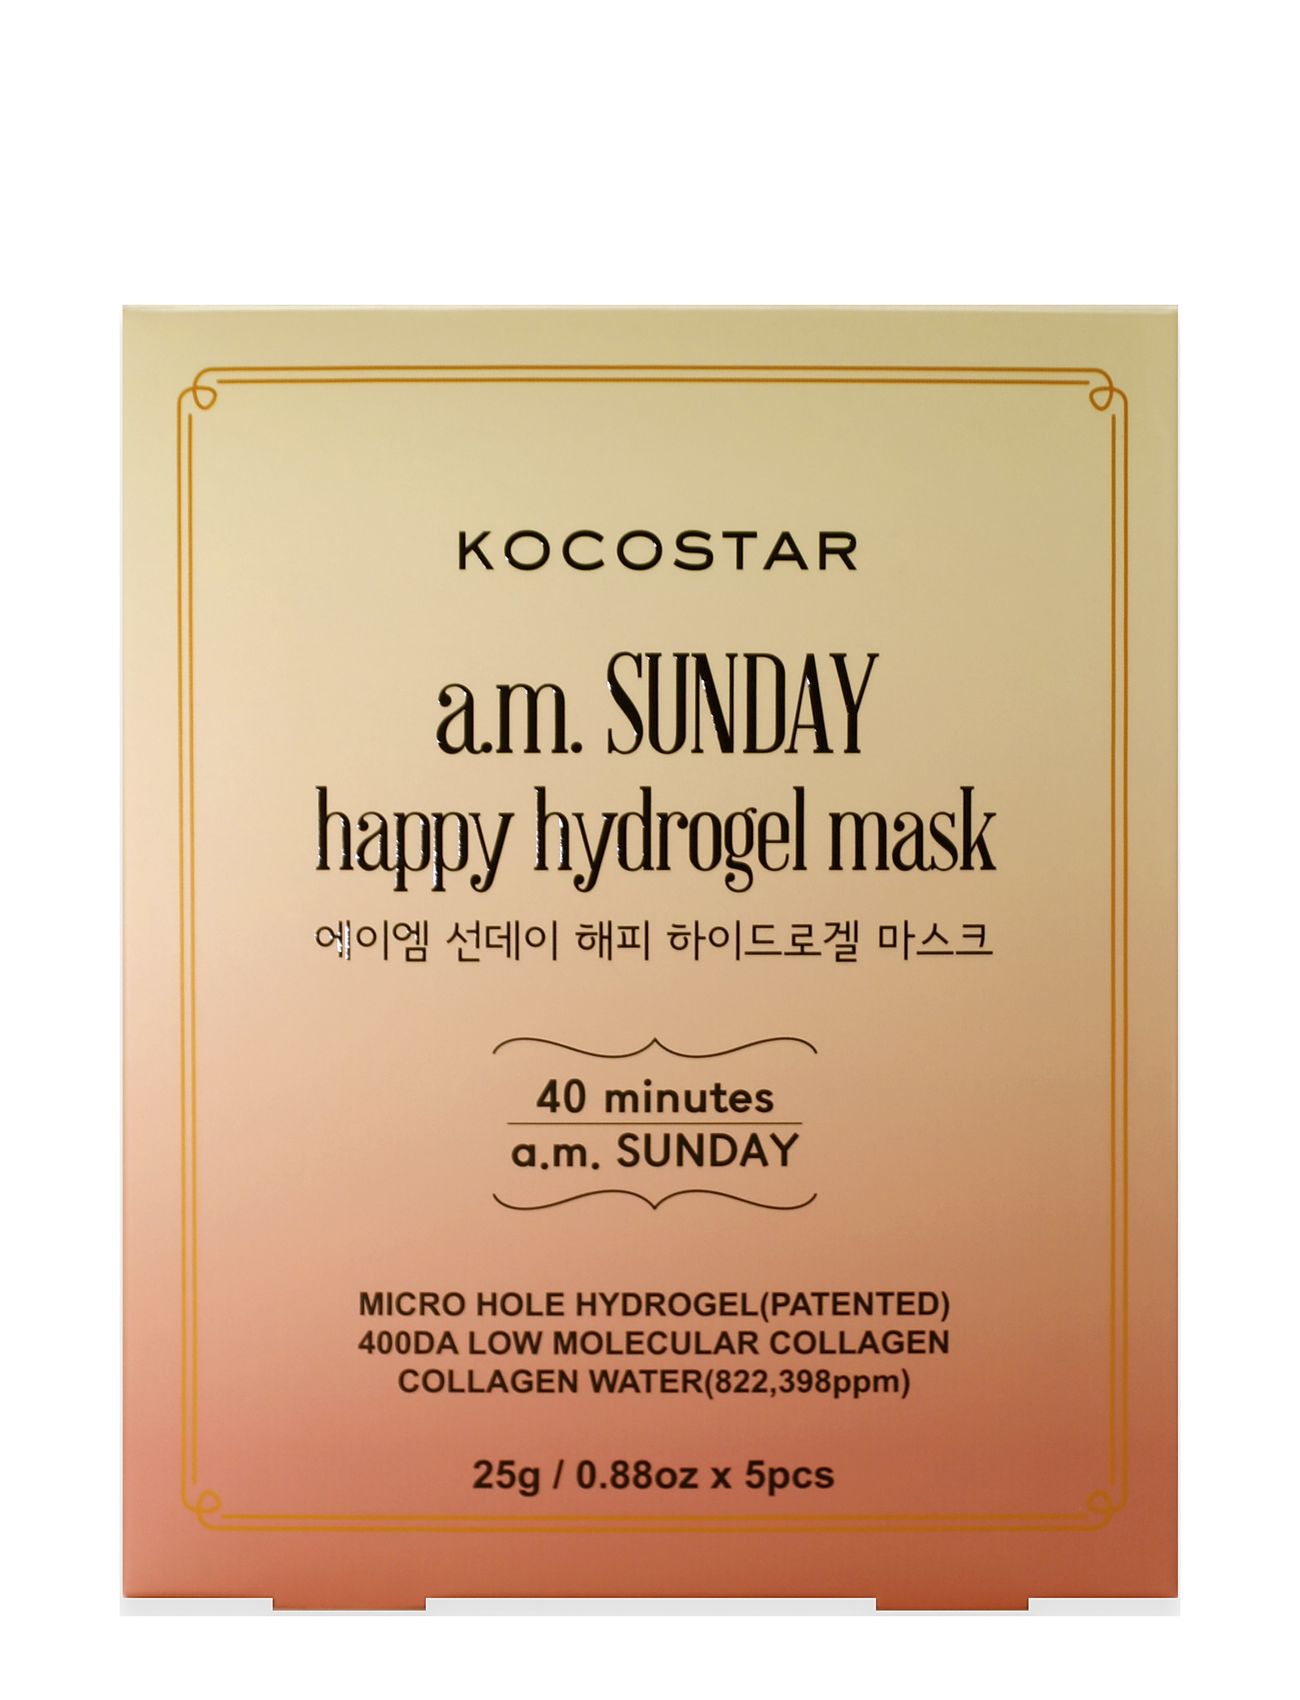 Kocostar A.m. Sunday Happy Hydrogel Mask 5 Pcs Beauty Women Skin Care Face Masks Sheetmask Nude KOCOSTAR